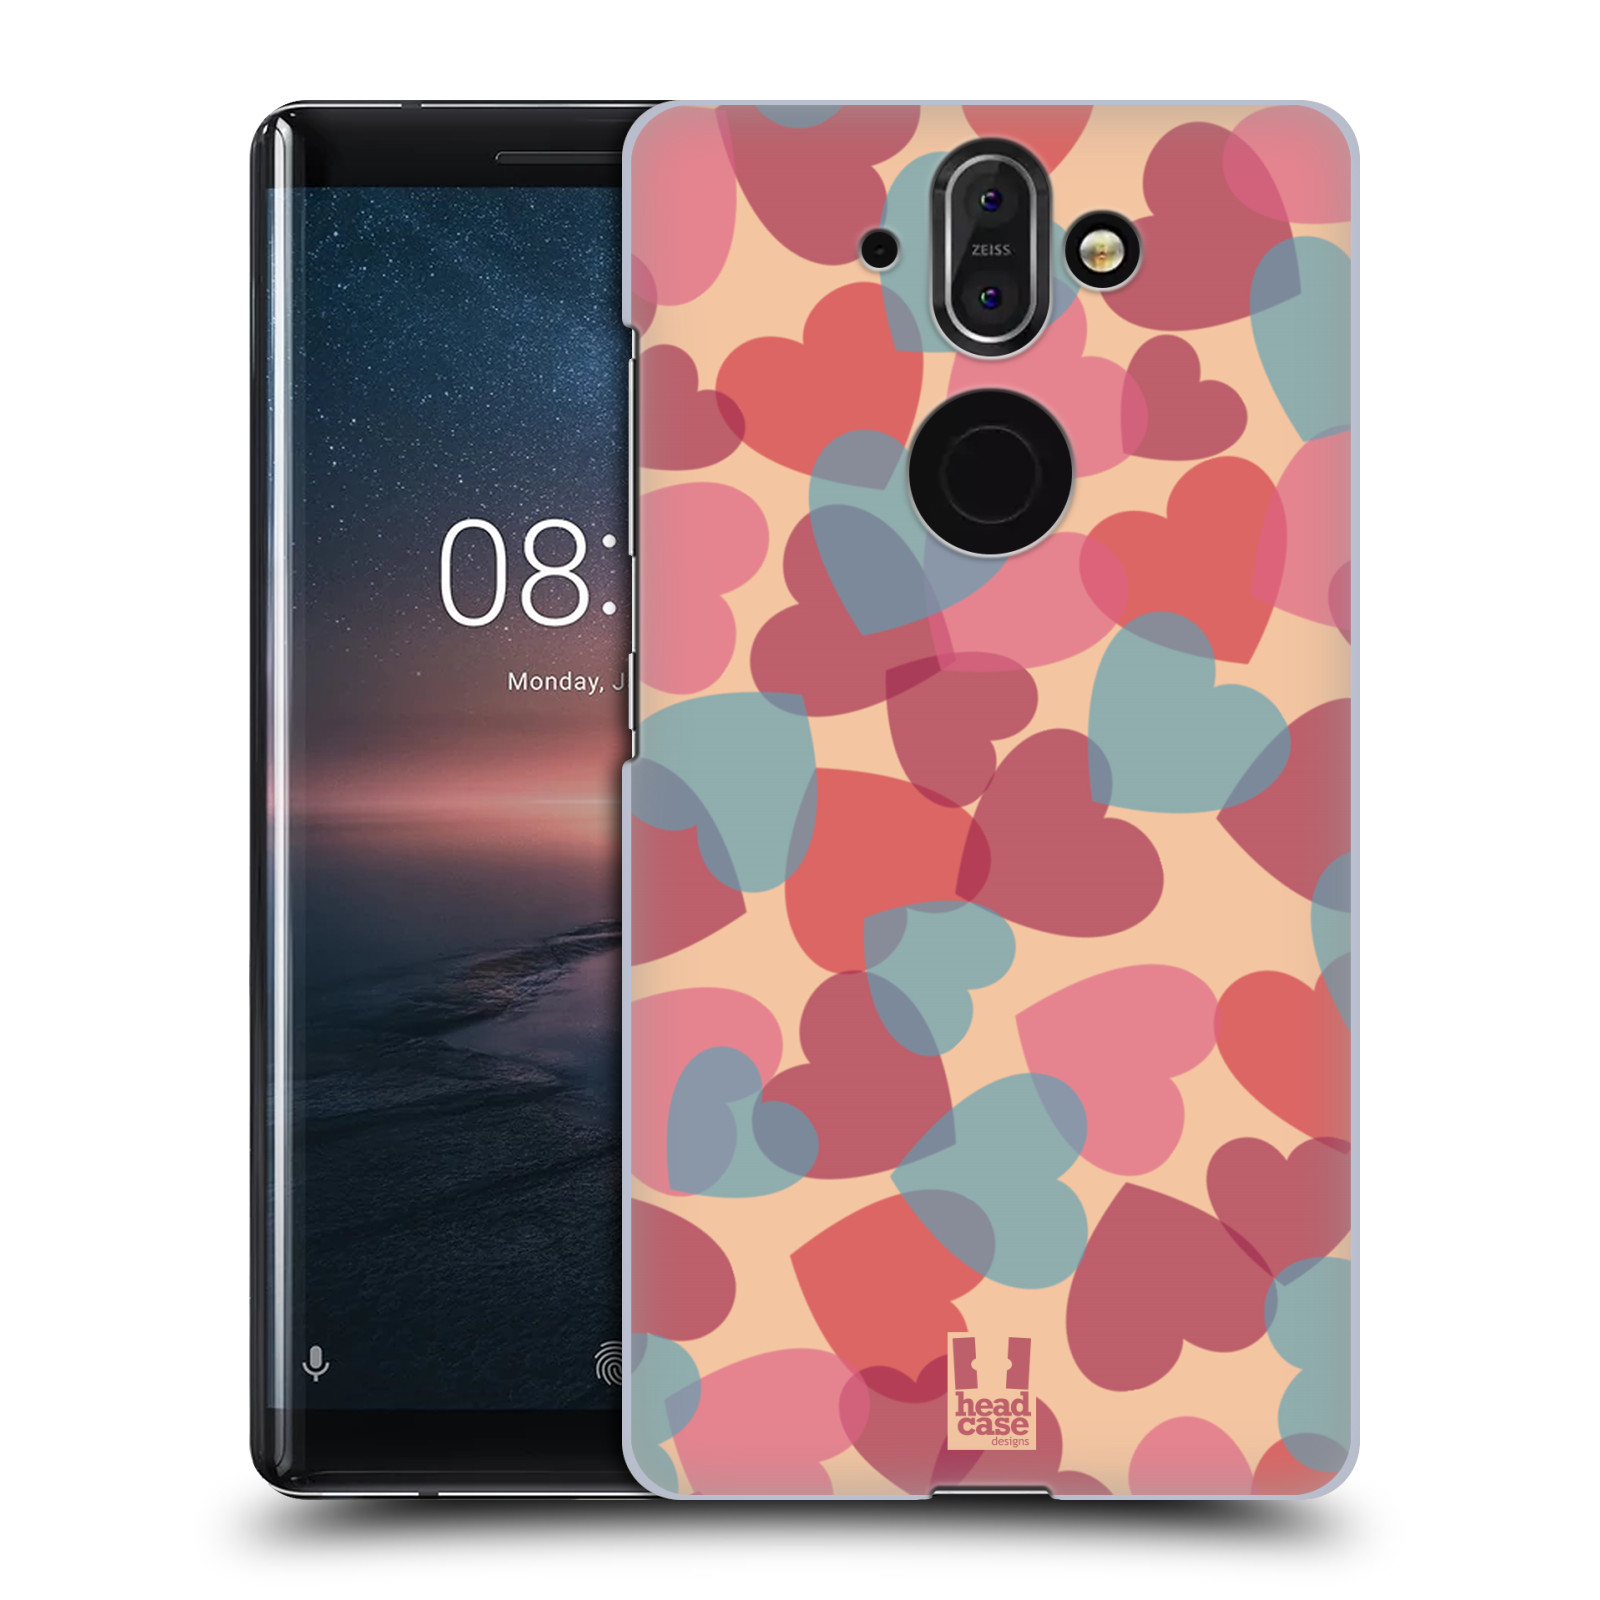 Zadní obal pro mobil Nokia 8 Sirocco - HEAD CASE - Růžová srdíčka kreslený vzor